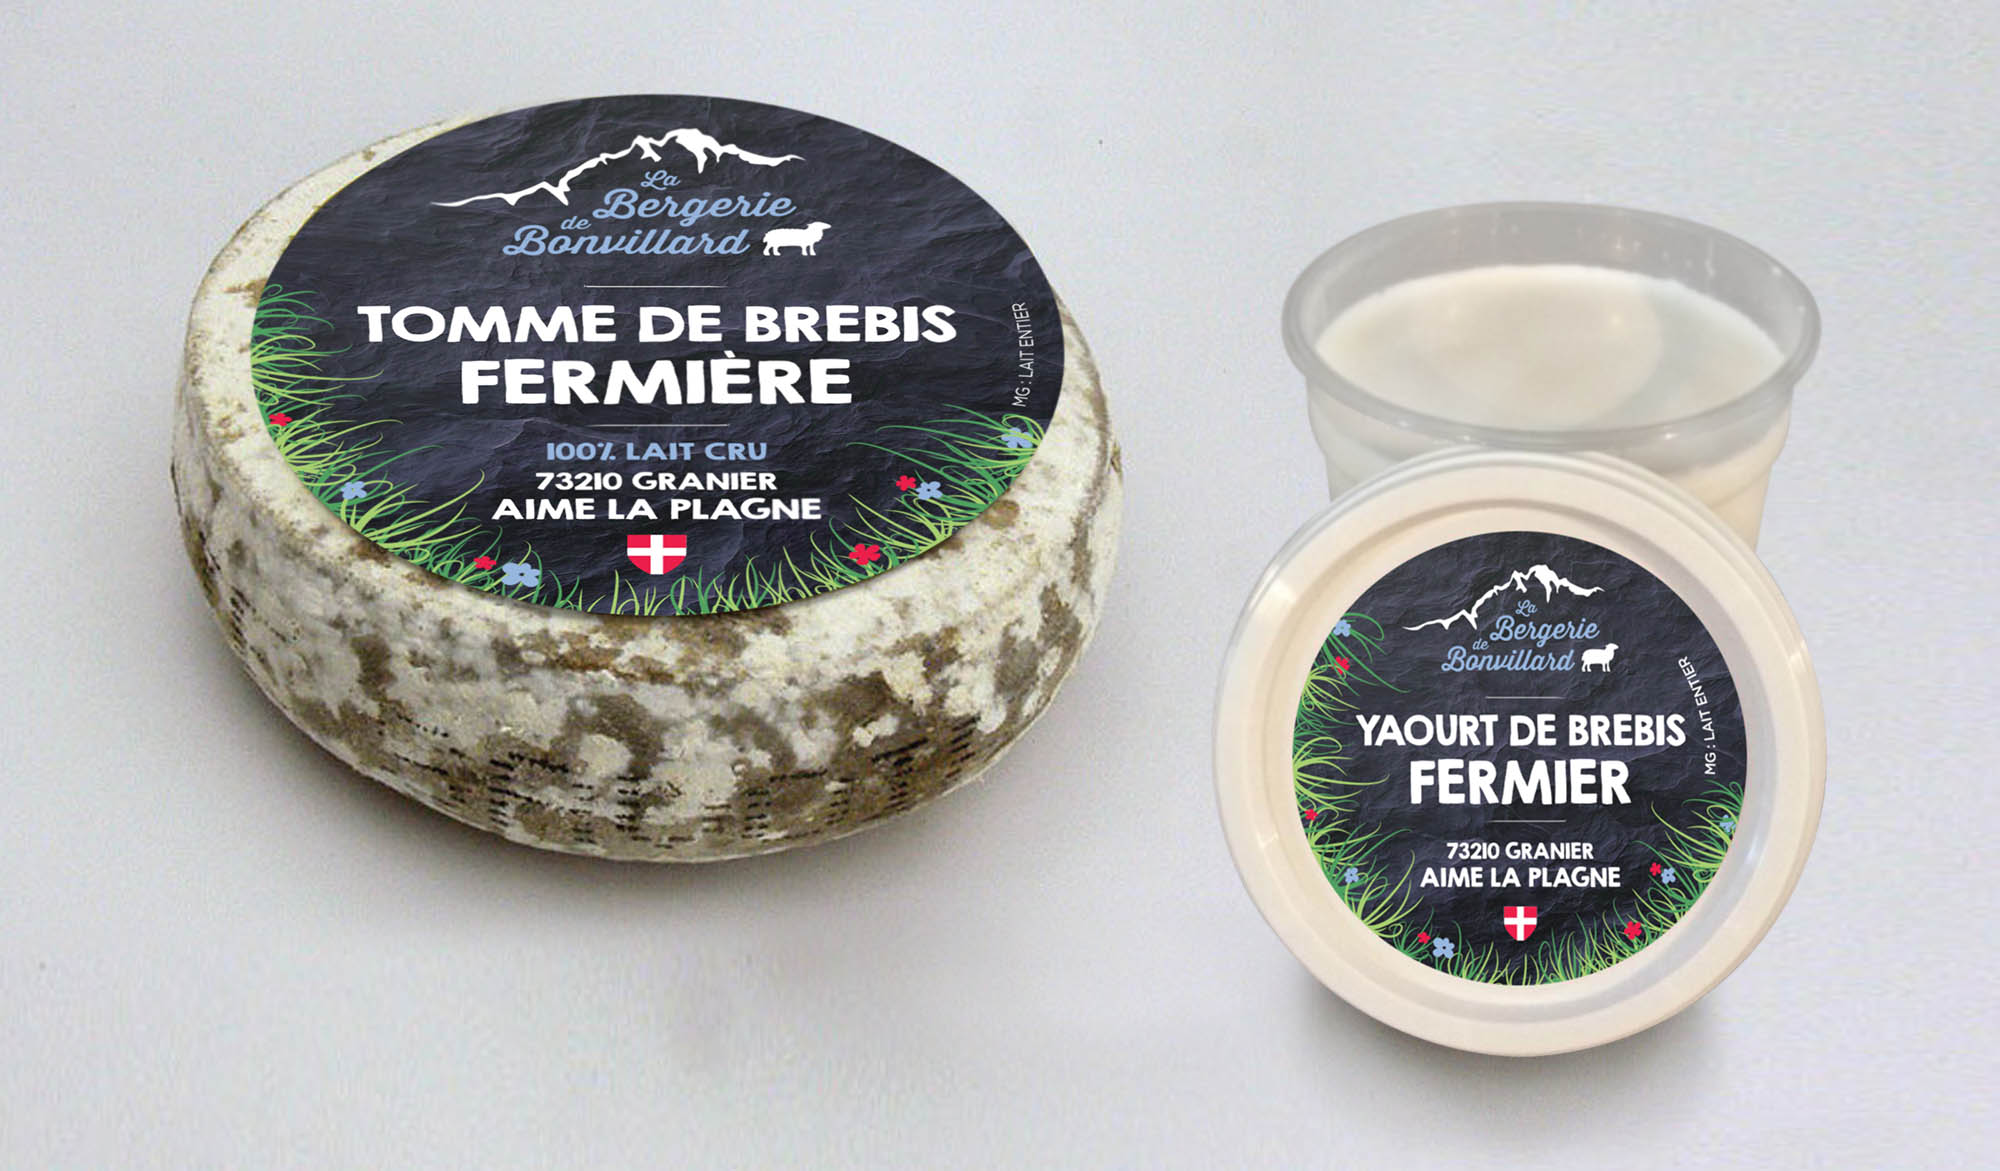 Bergerie-de-Bonvillard-creation-etiquette-fromage